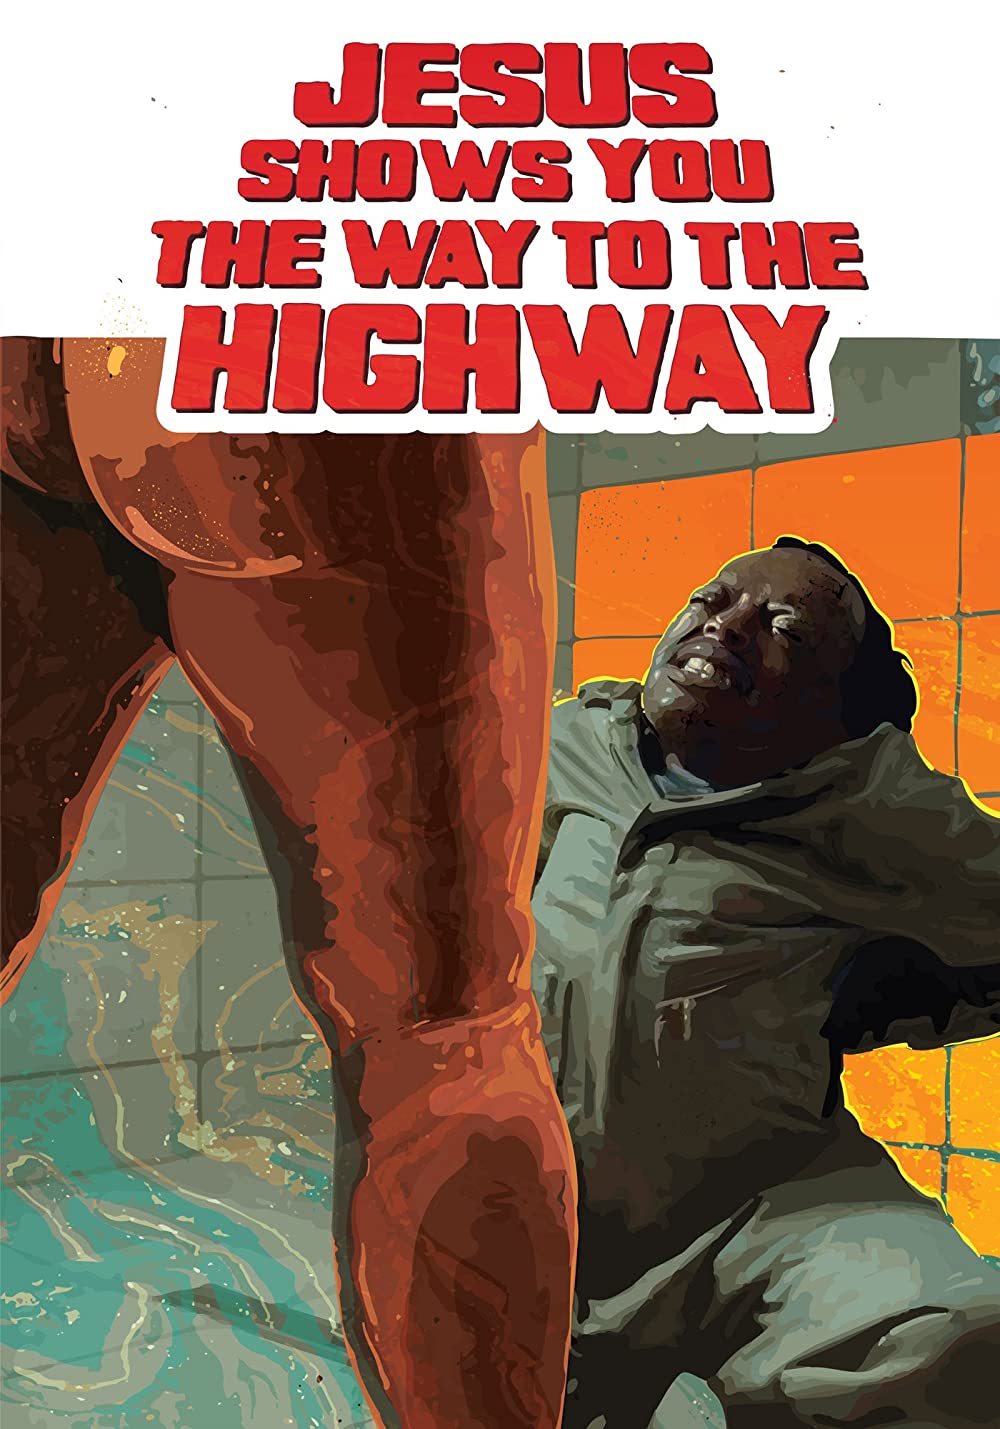 Filmbeschreibung zu Jesus shows you the way to the Highway (OV)